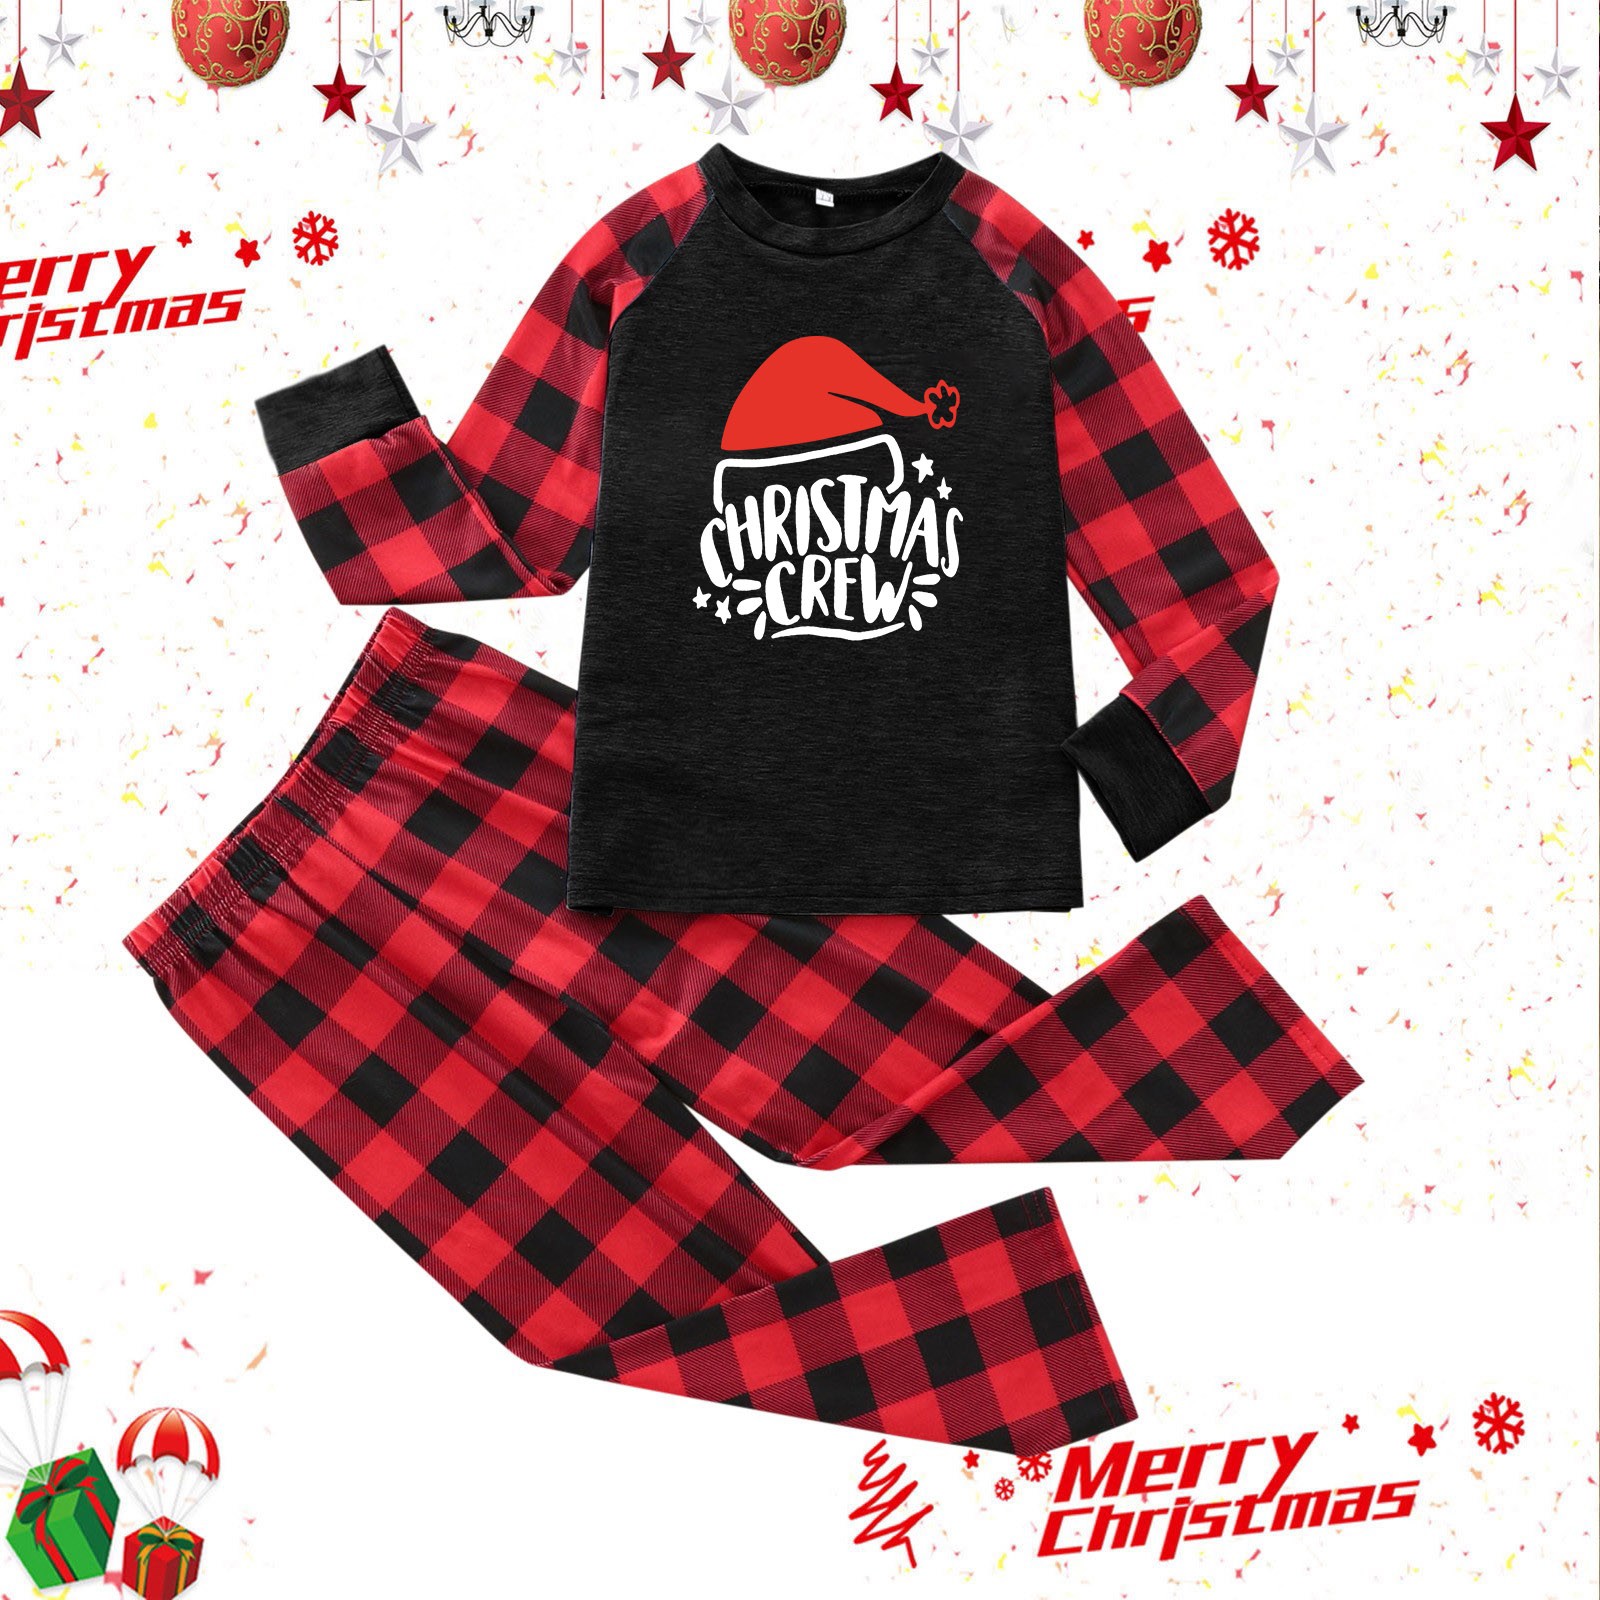 TAIAOJING Family Christmas Pjs Matching Sets Kids Matching Family Pajamas Sets Crew Print Top And Plaid Pants Sleepwear For Kids - image 4 of 8